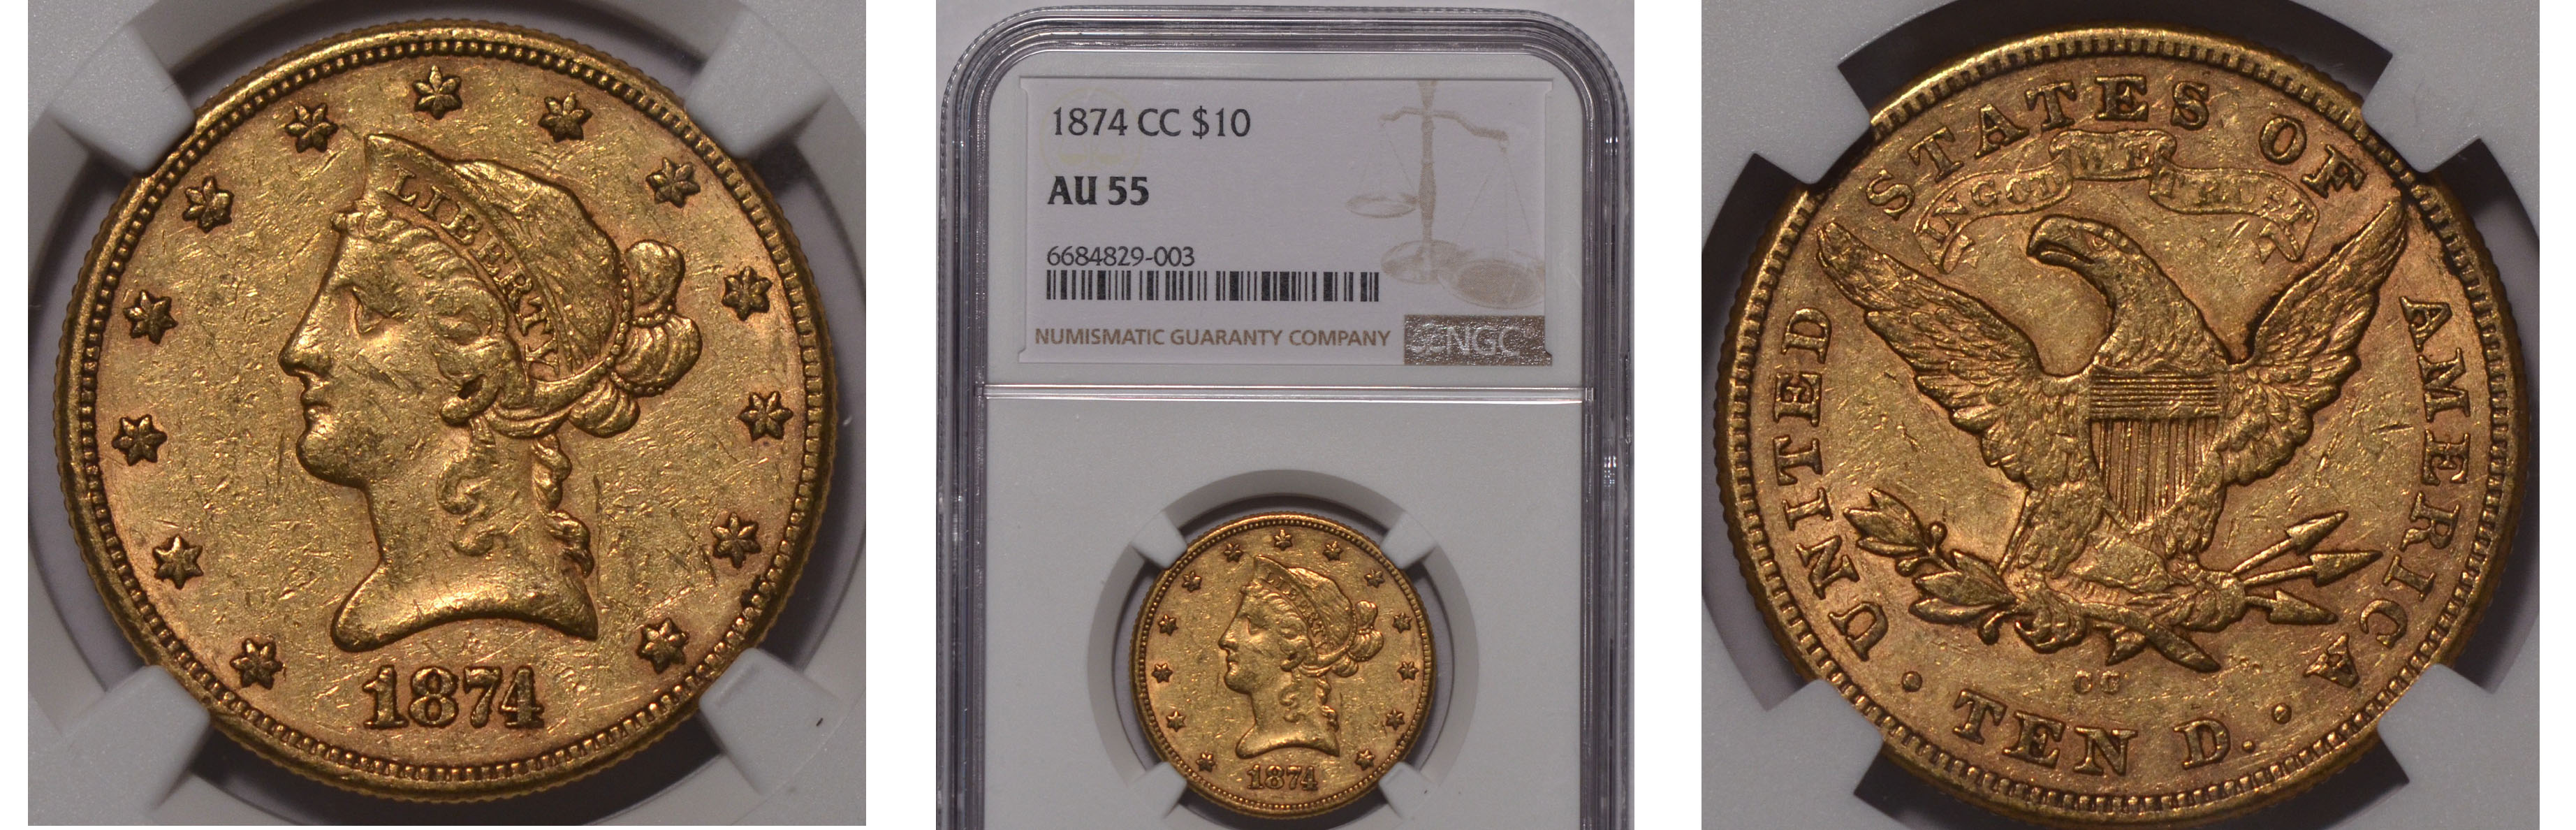 1874cc-$10-NGC-AU55